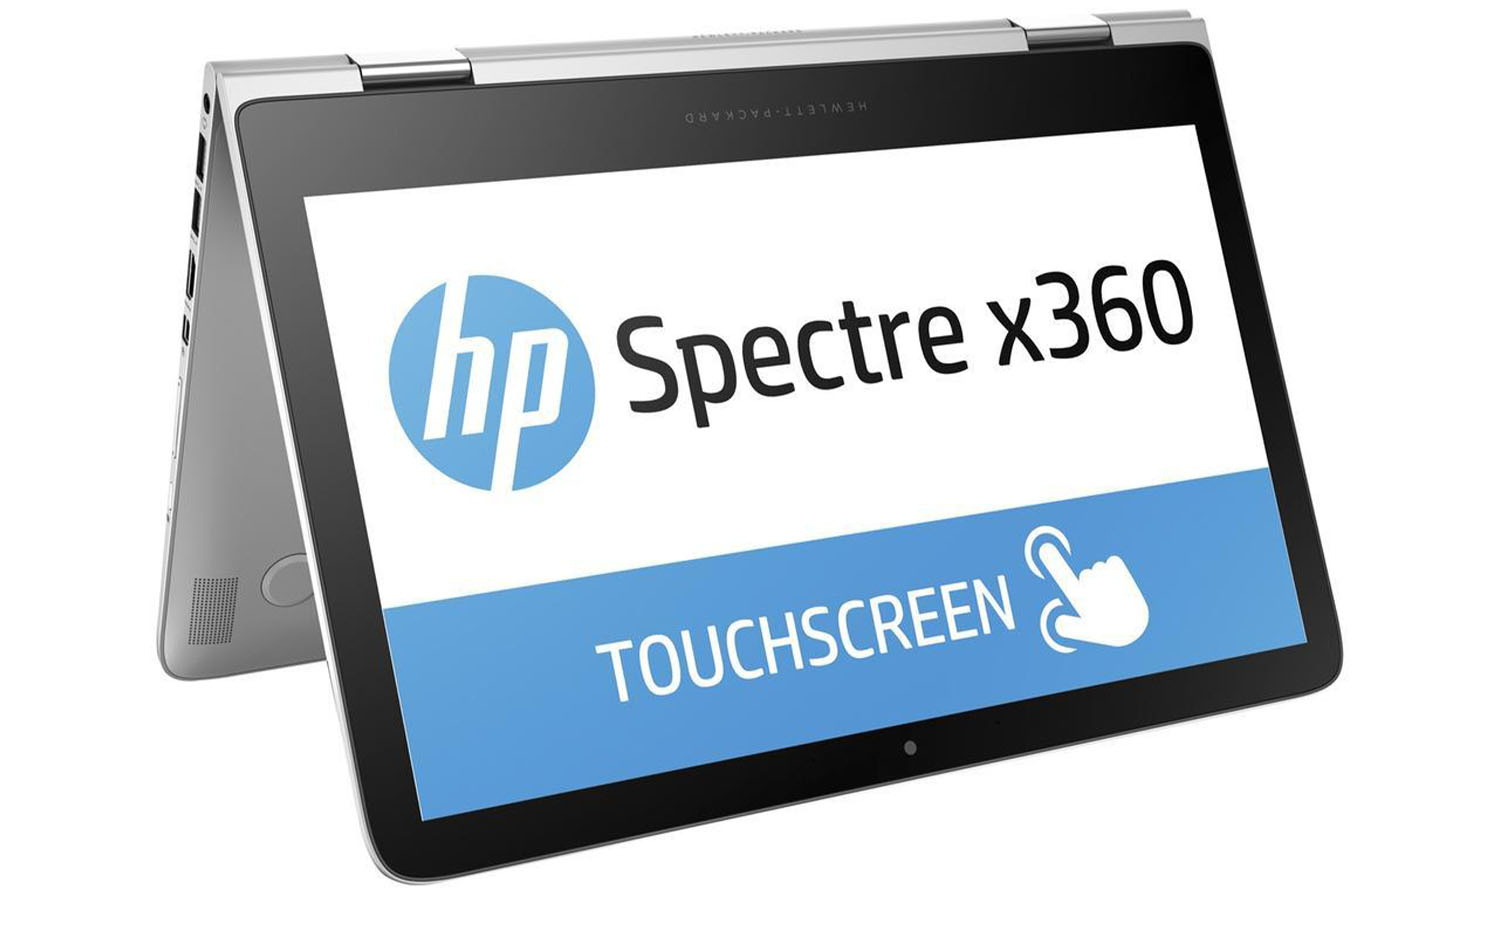 HP Spectre x360 13 ac023dx Intel Core i7 7th Gen 16GB RAM 512GB SSD Touchscreen Windows 10 Home